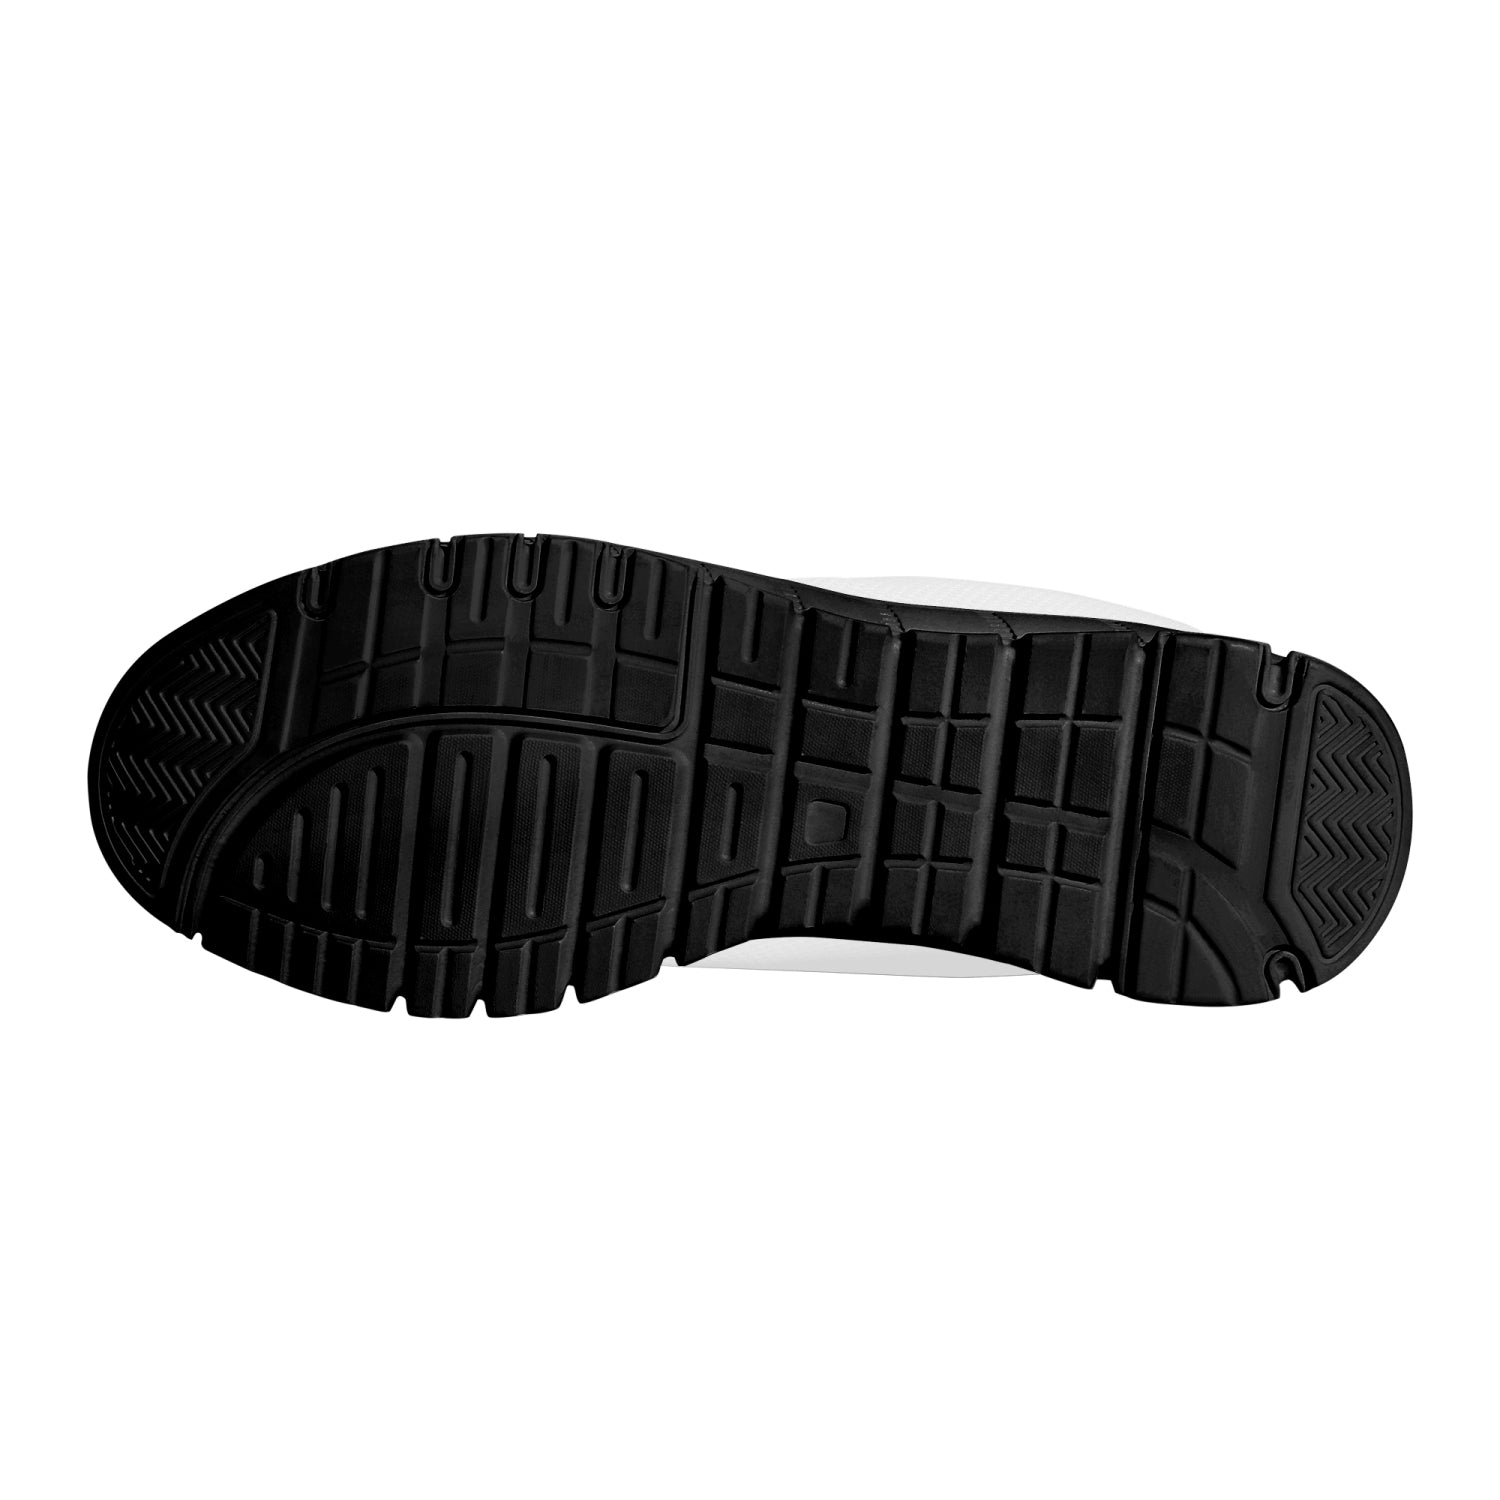 Urban Jungle Black Camo Sneakers